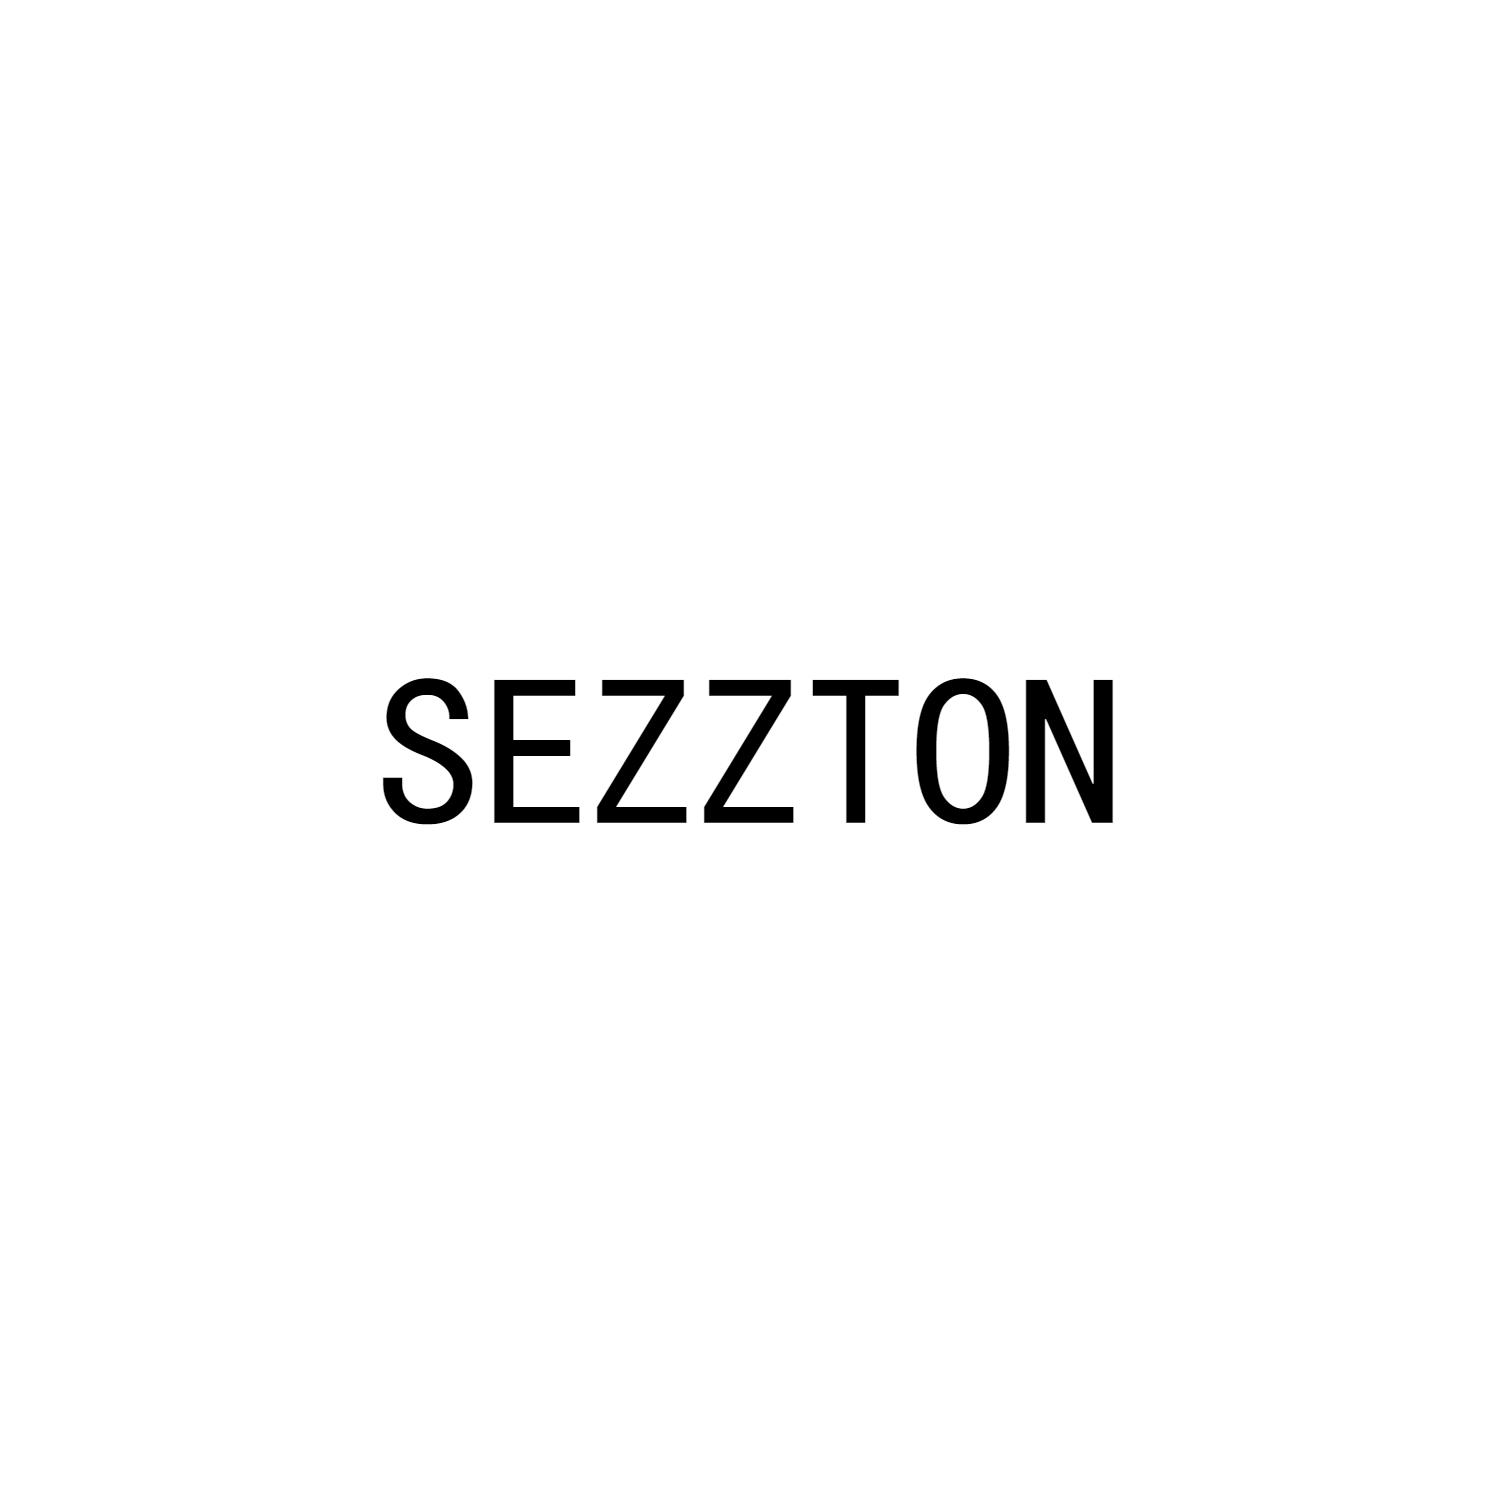 SEZZTON